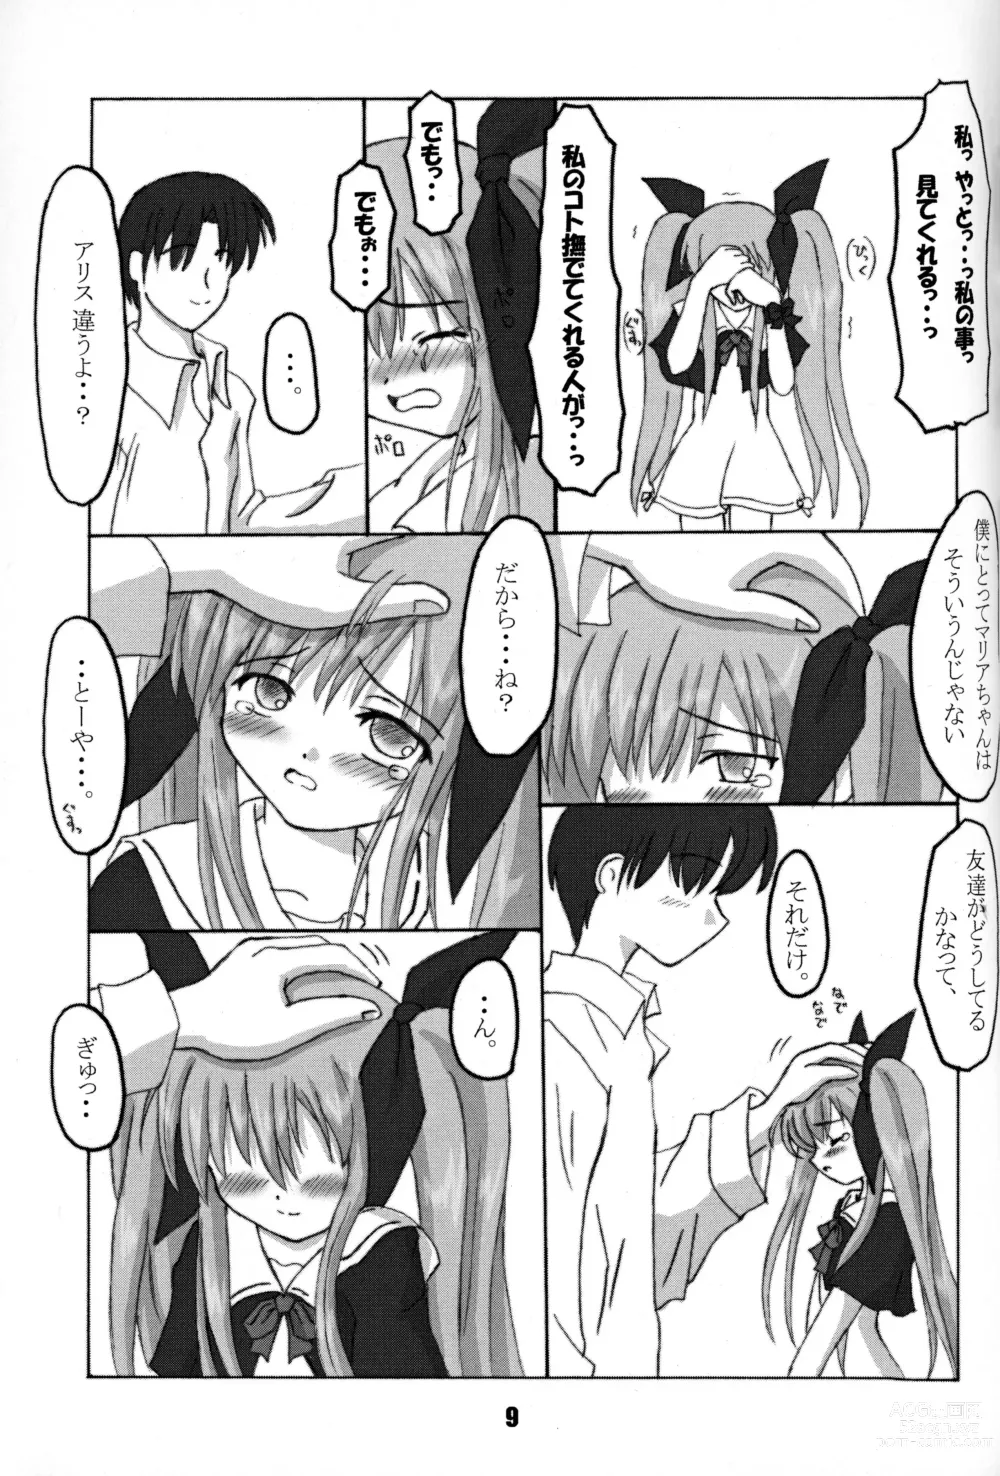 Page 8 of doujinshi Rollin 8